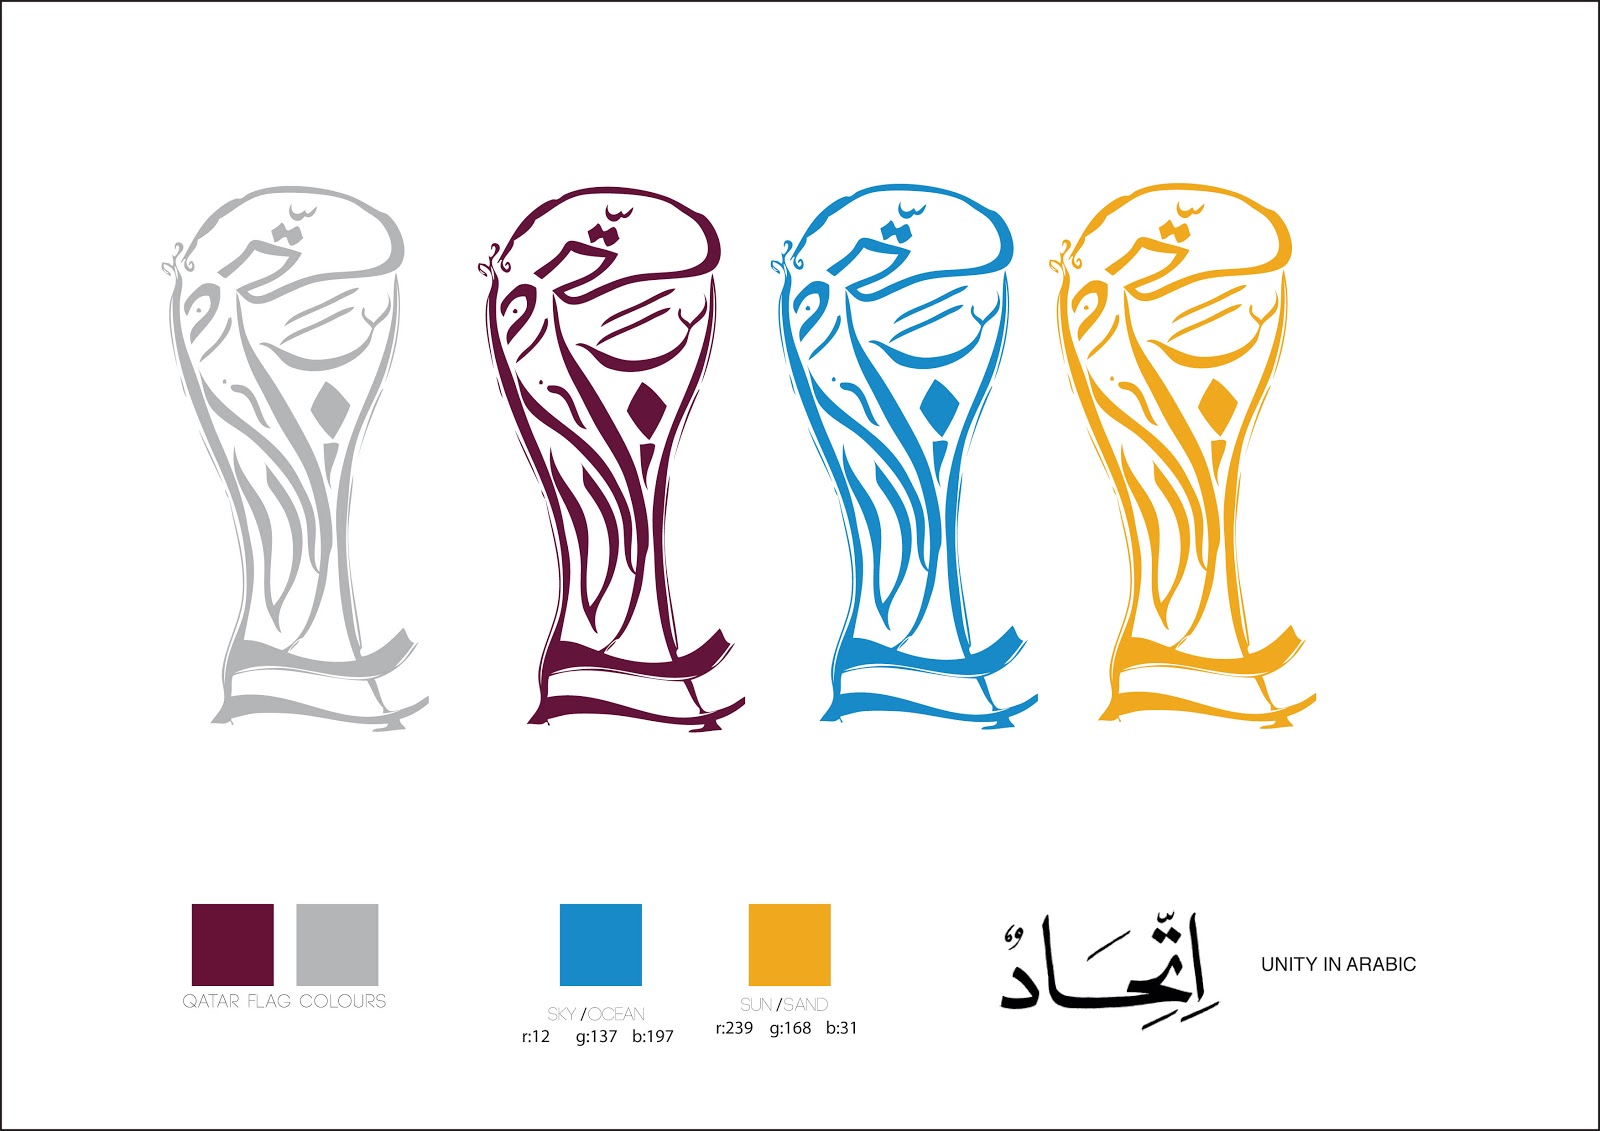 ArtStation - FIFA WORLD CUP QATAR 2022 LOGO